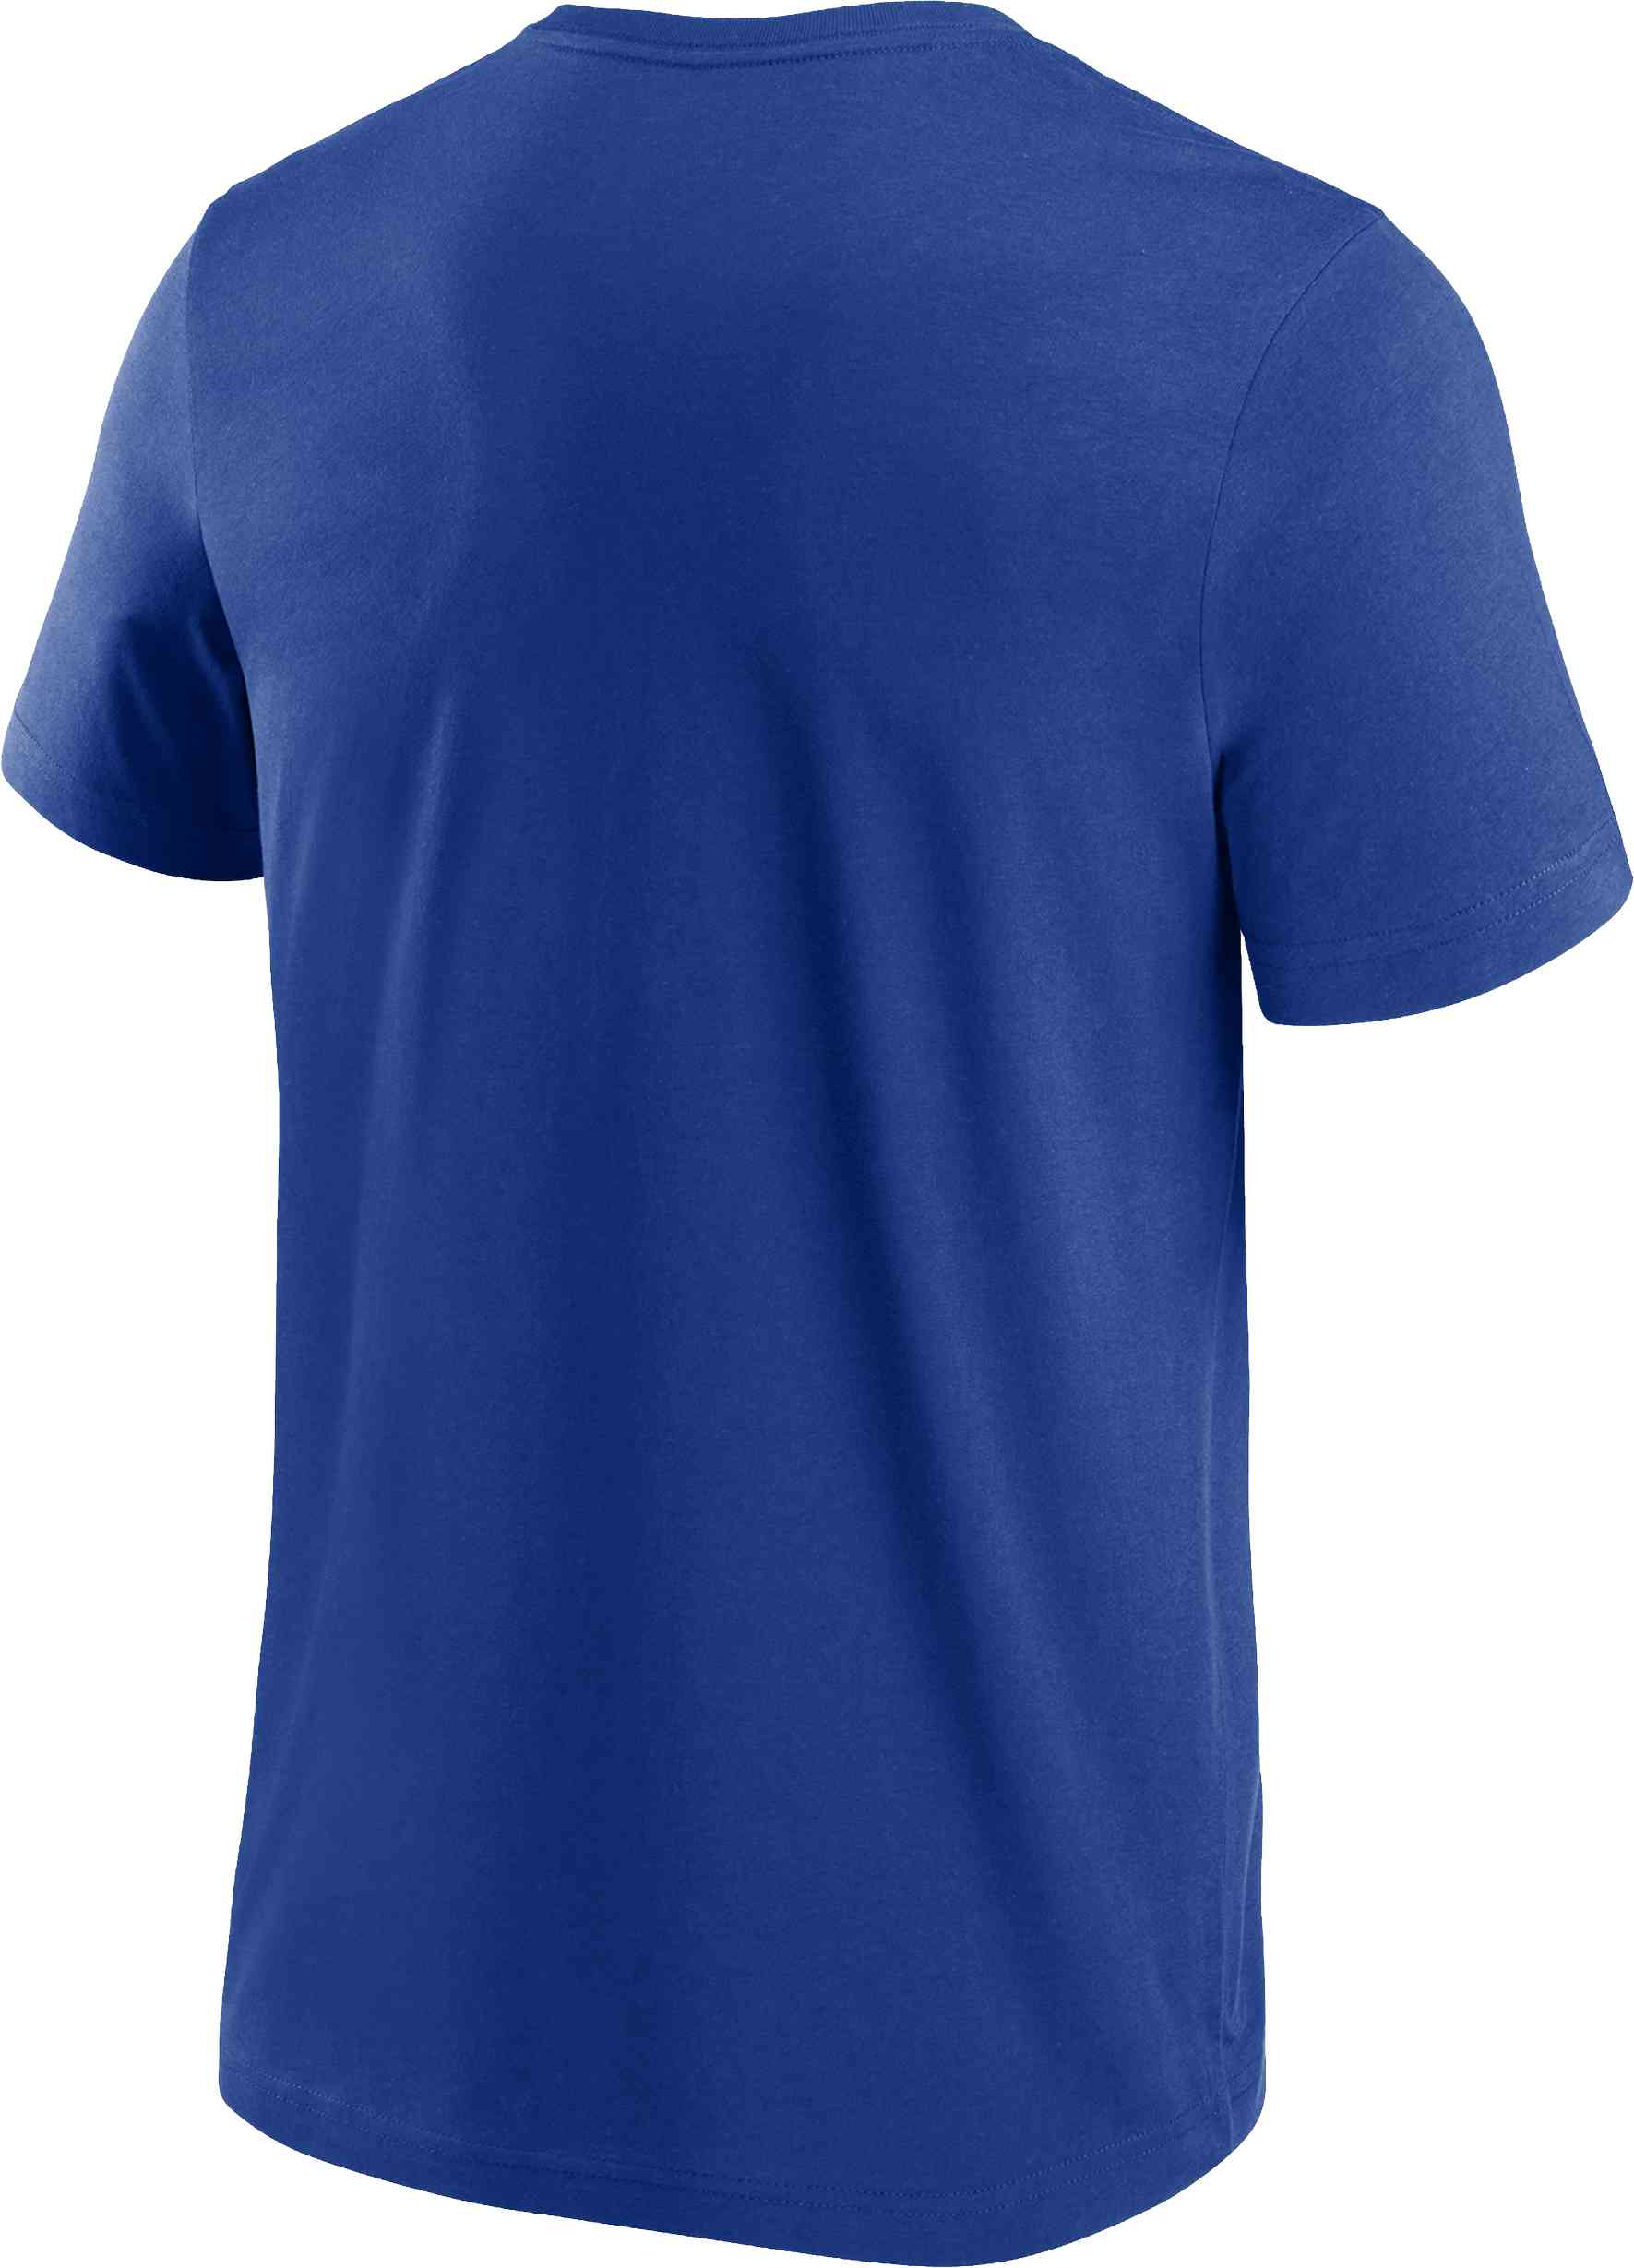 Fanatics - NFL Buffalo Bills Primary Logo Graphic T-Shirt